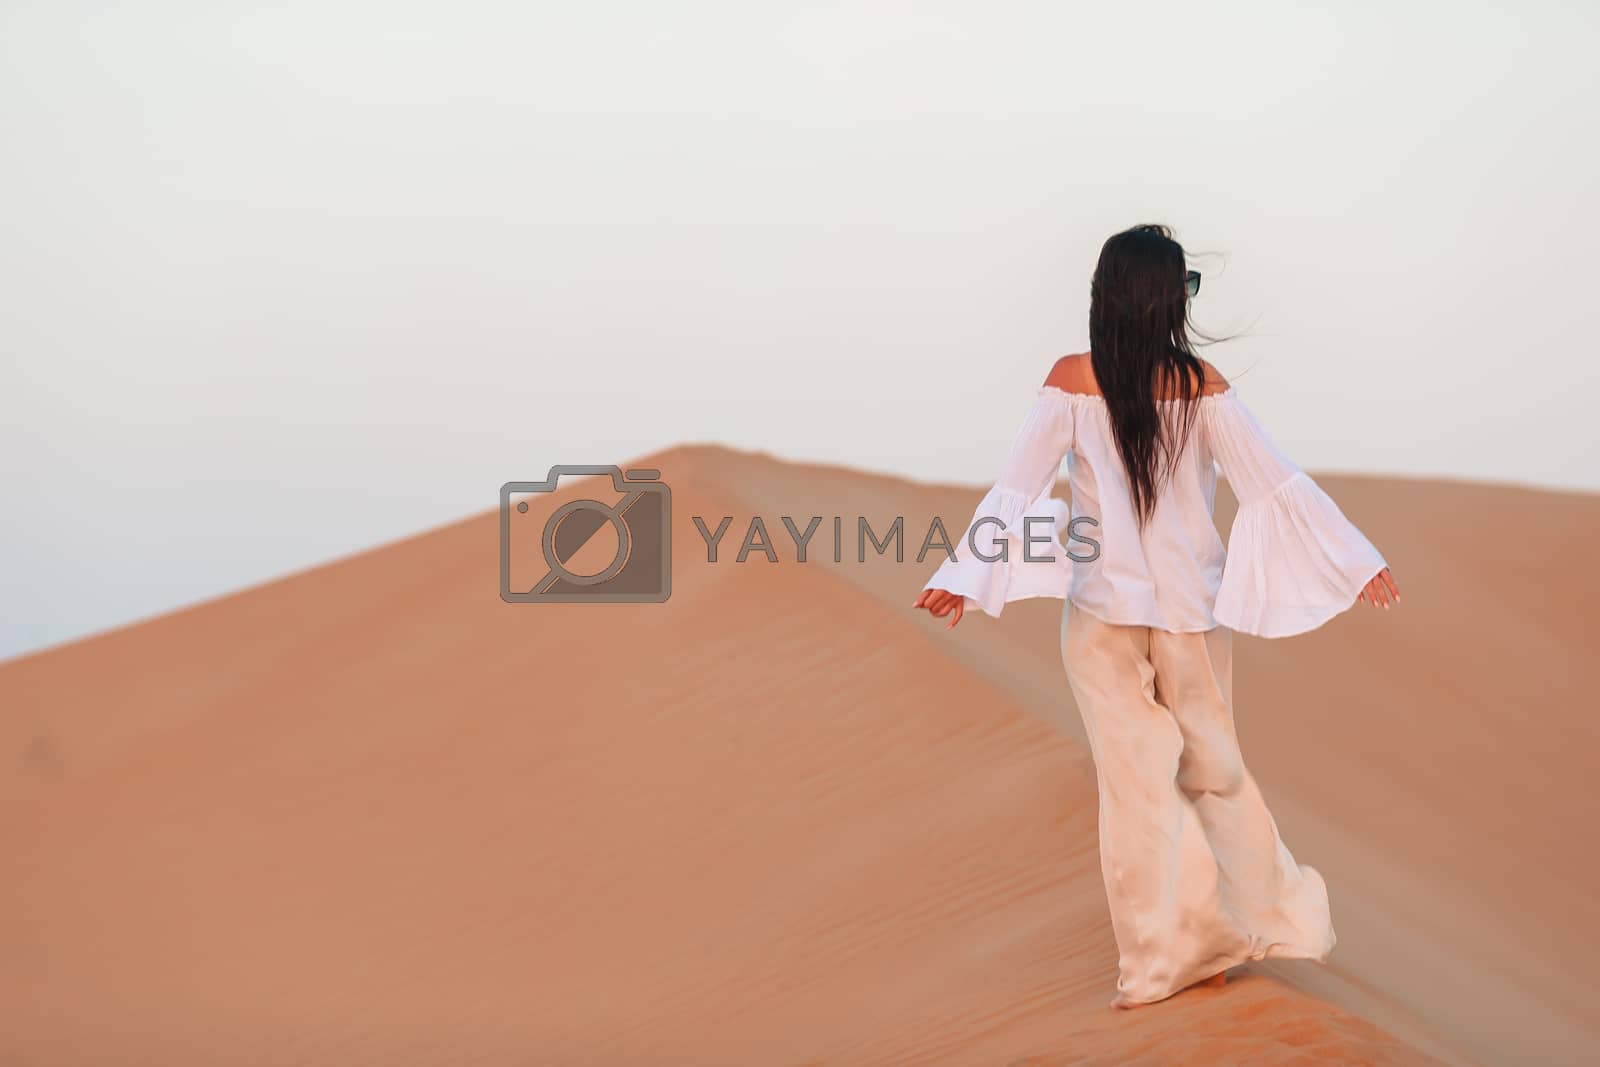 Royalty free image of Girl among dunes in desert in United Arab Emirates by travnikovstudio